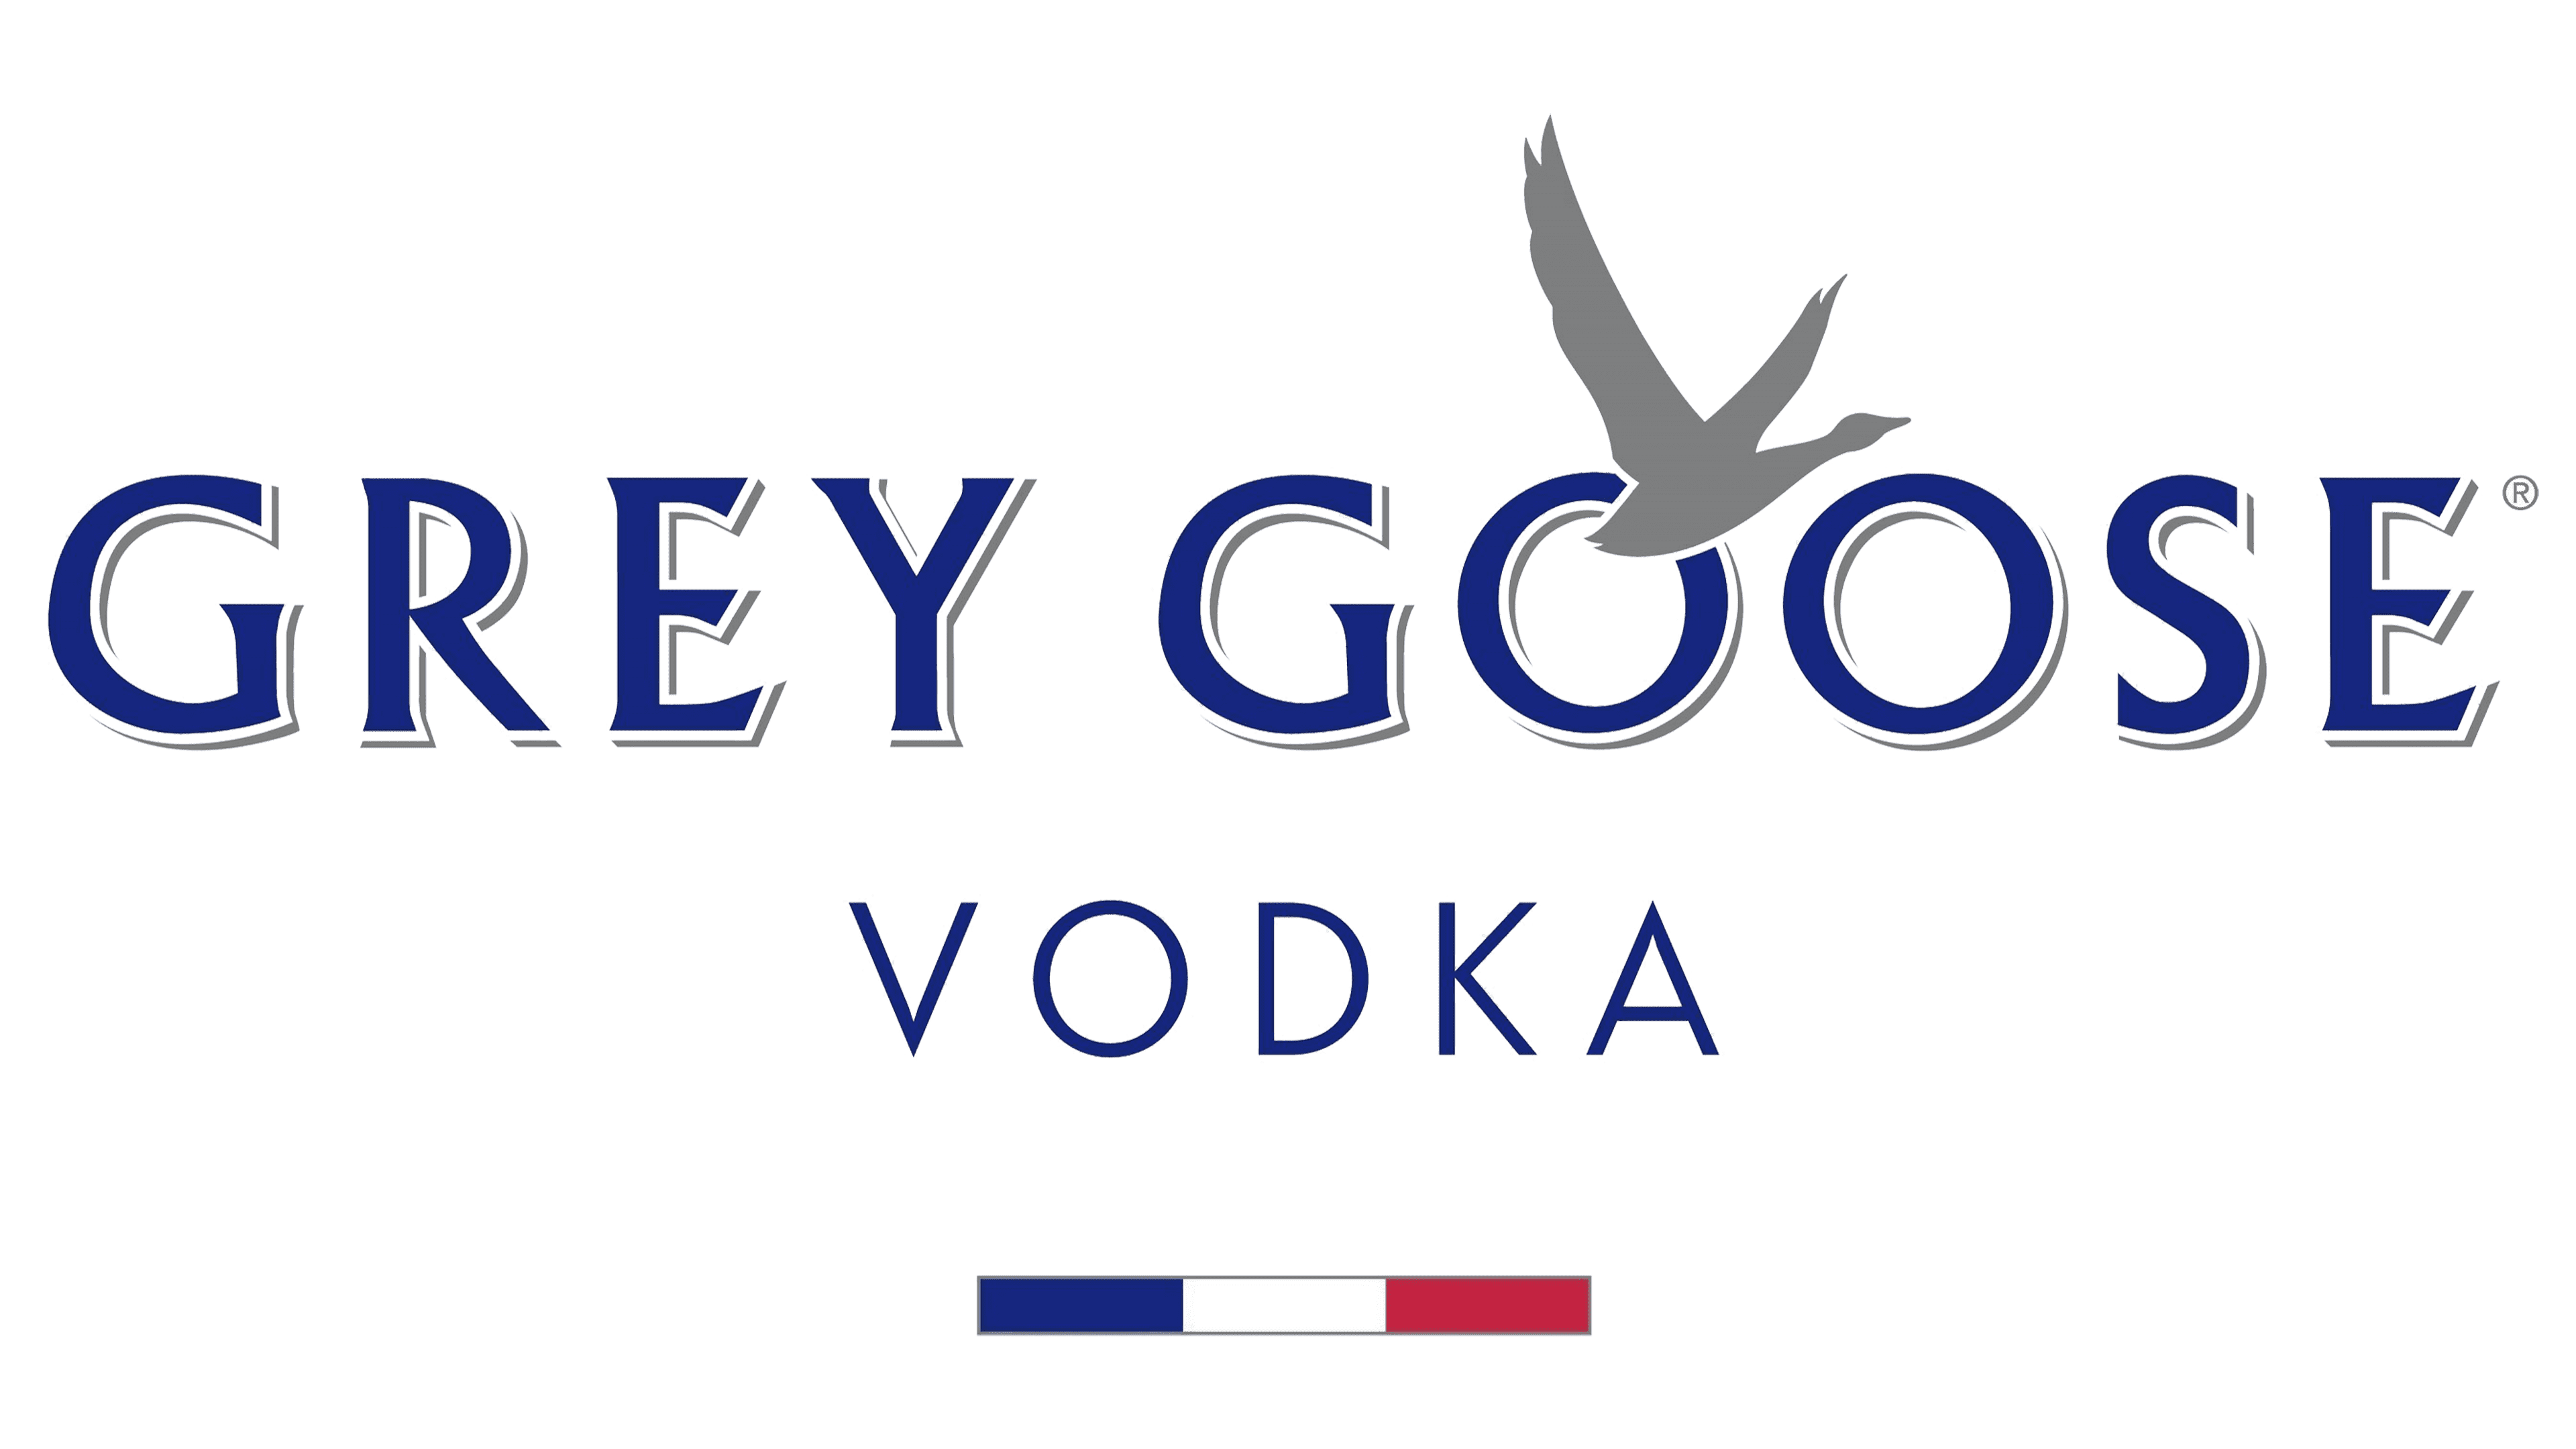 grey goose logo